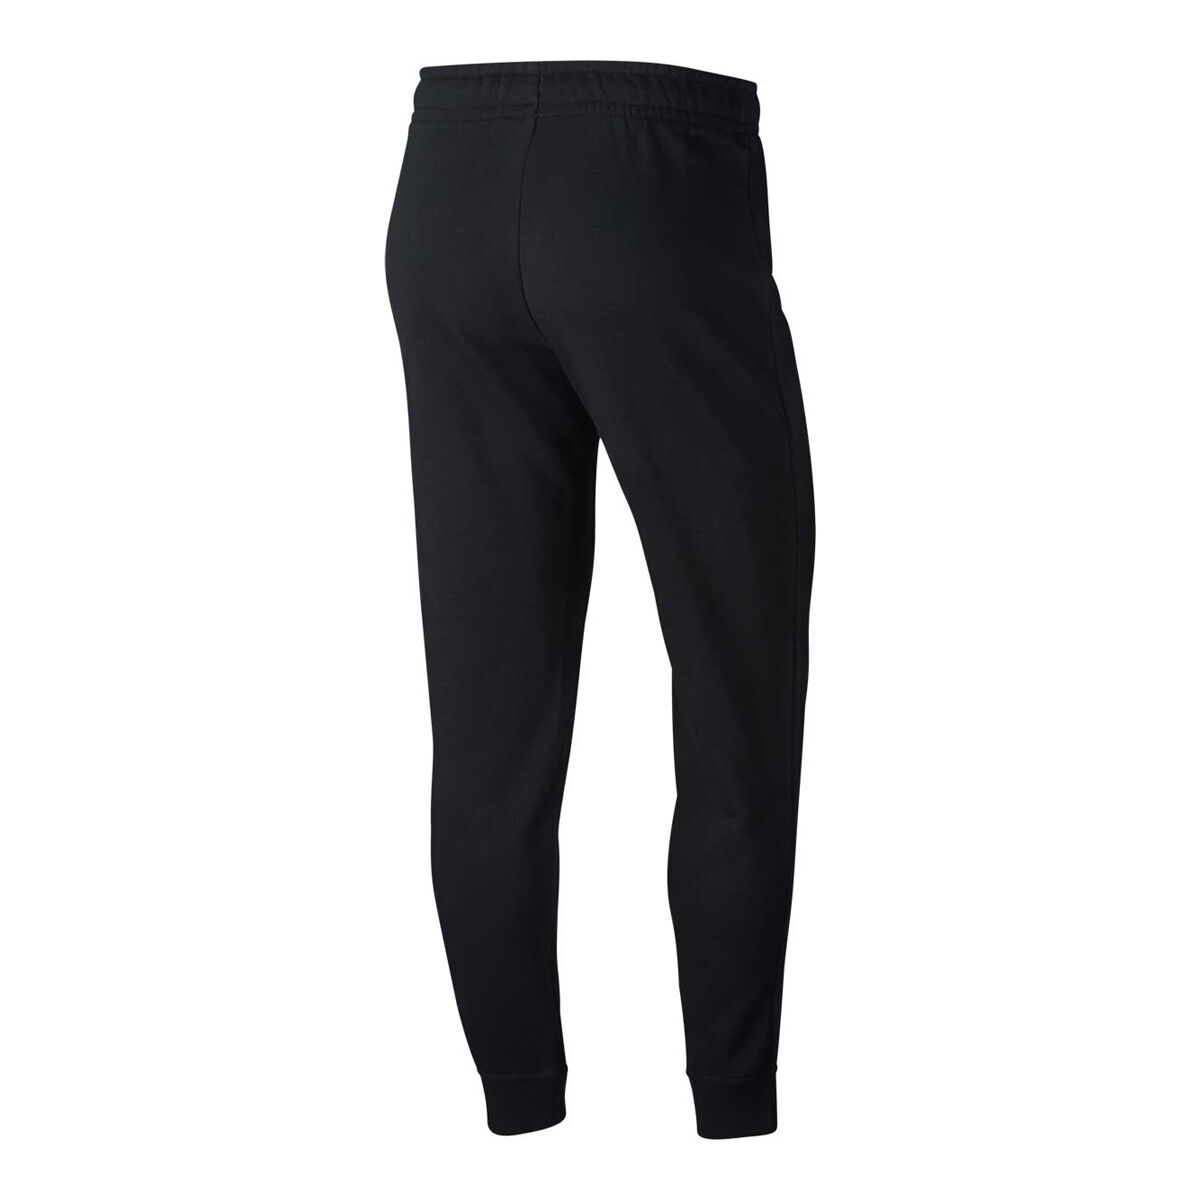 NIKE Women's Power Training Pants, Black/Cool Grey, X-Small, Pants